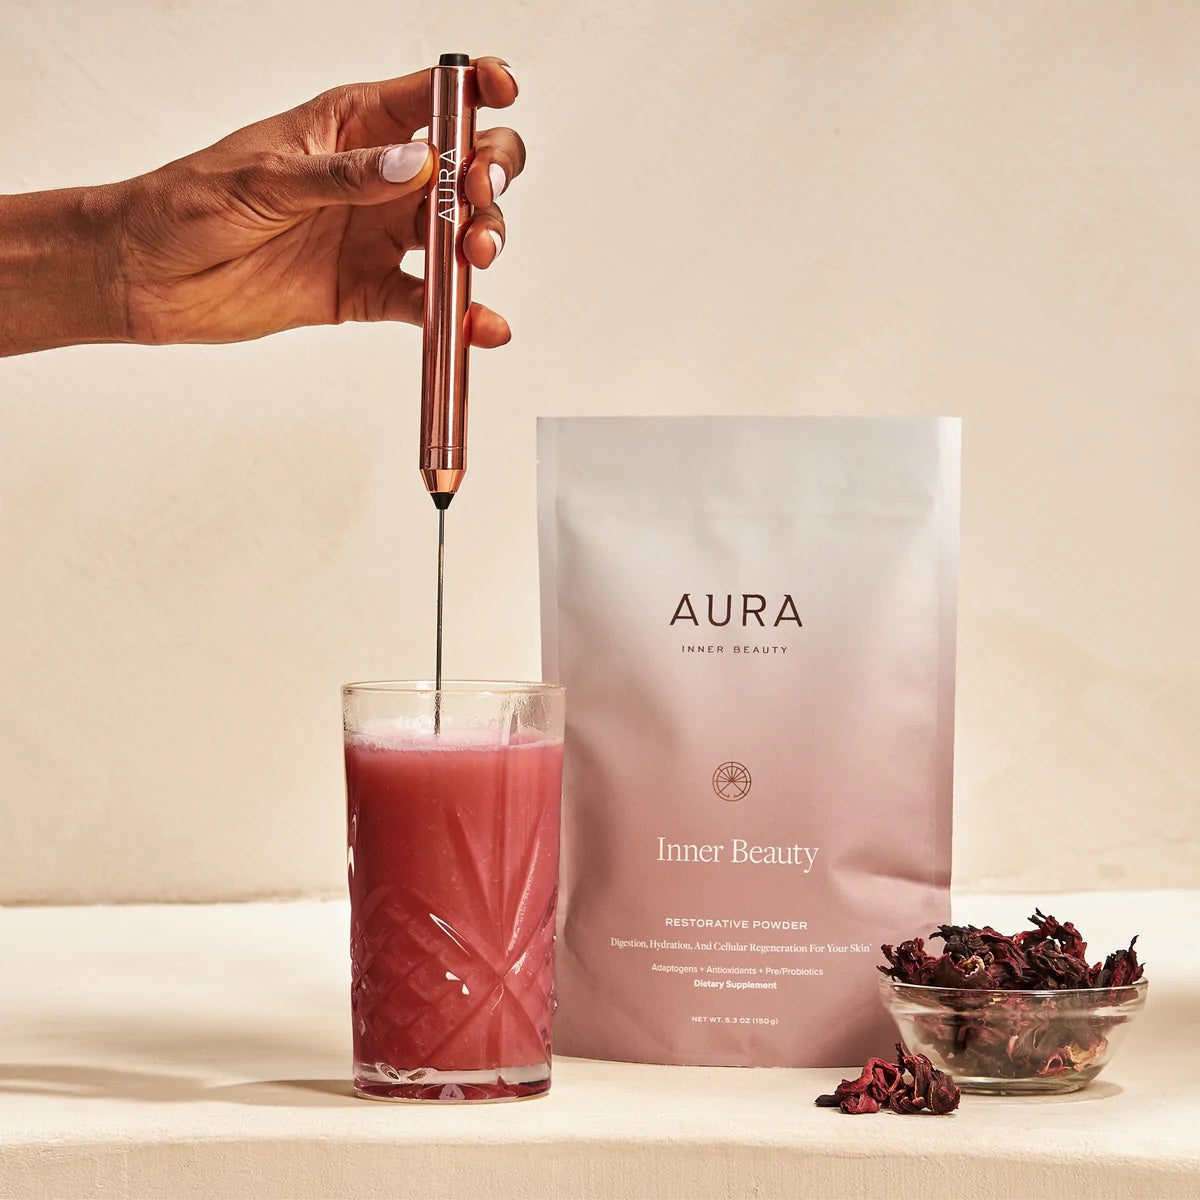 AURA Inner Beauty | Inner Beauty Restorative Powder